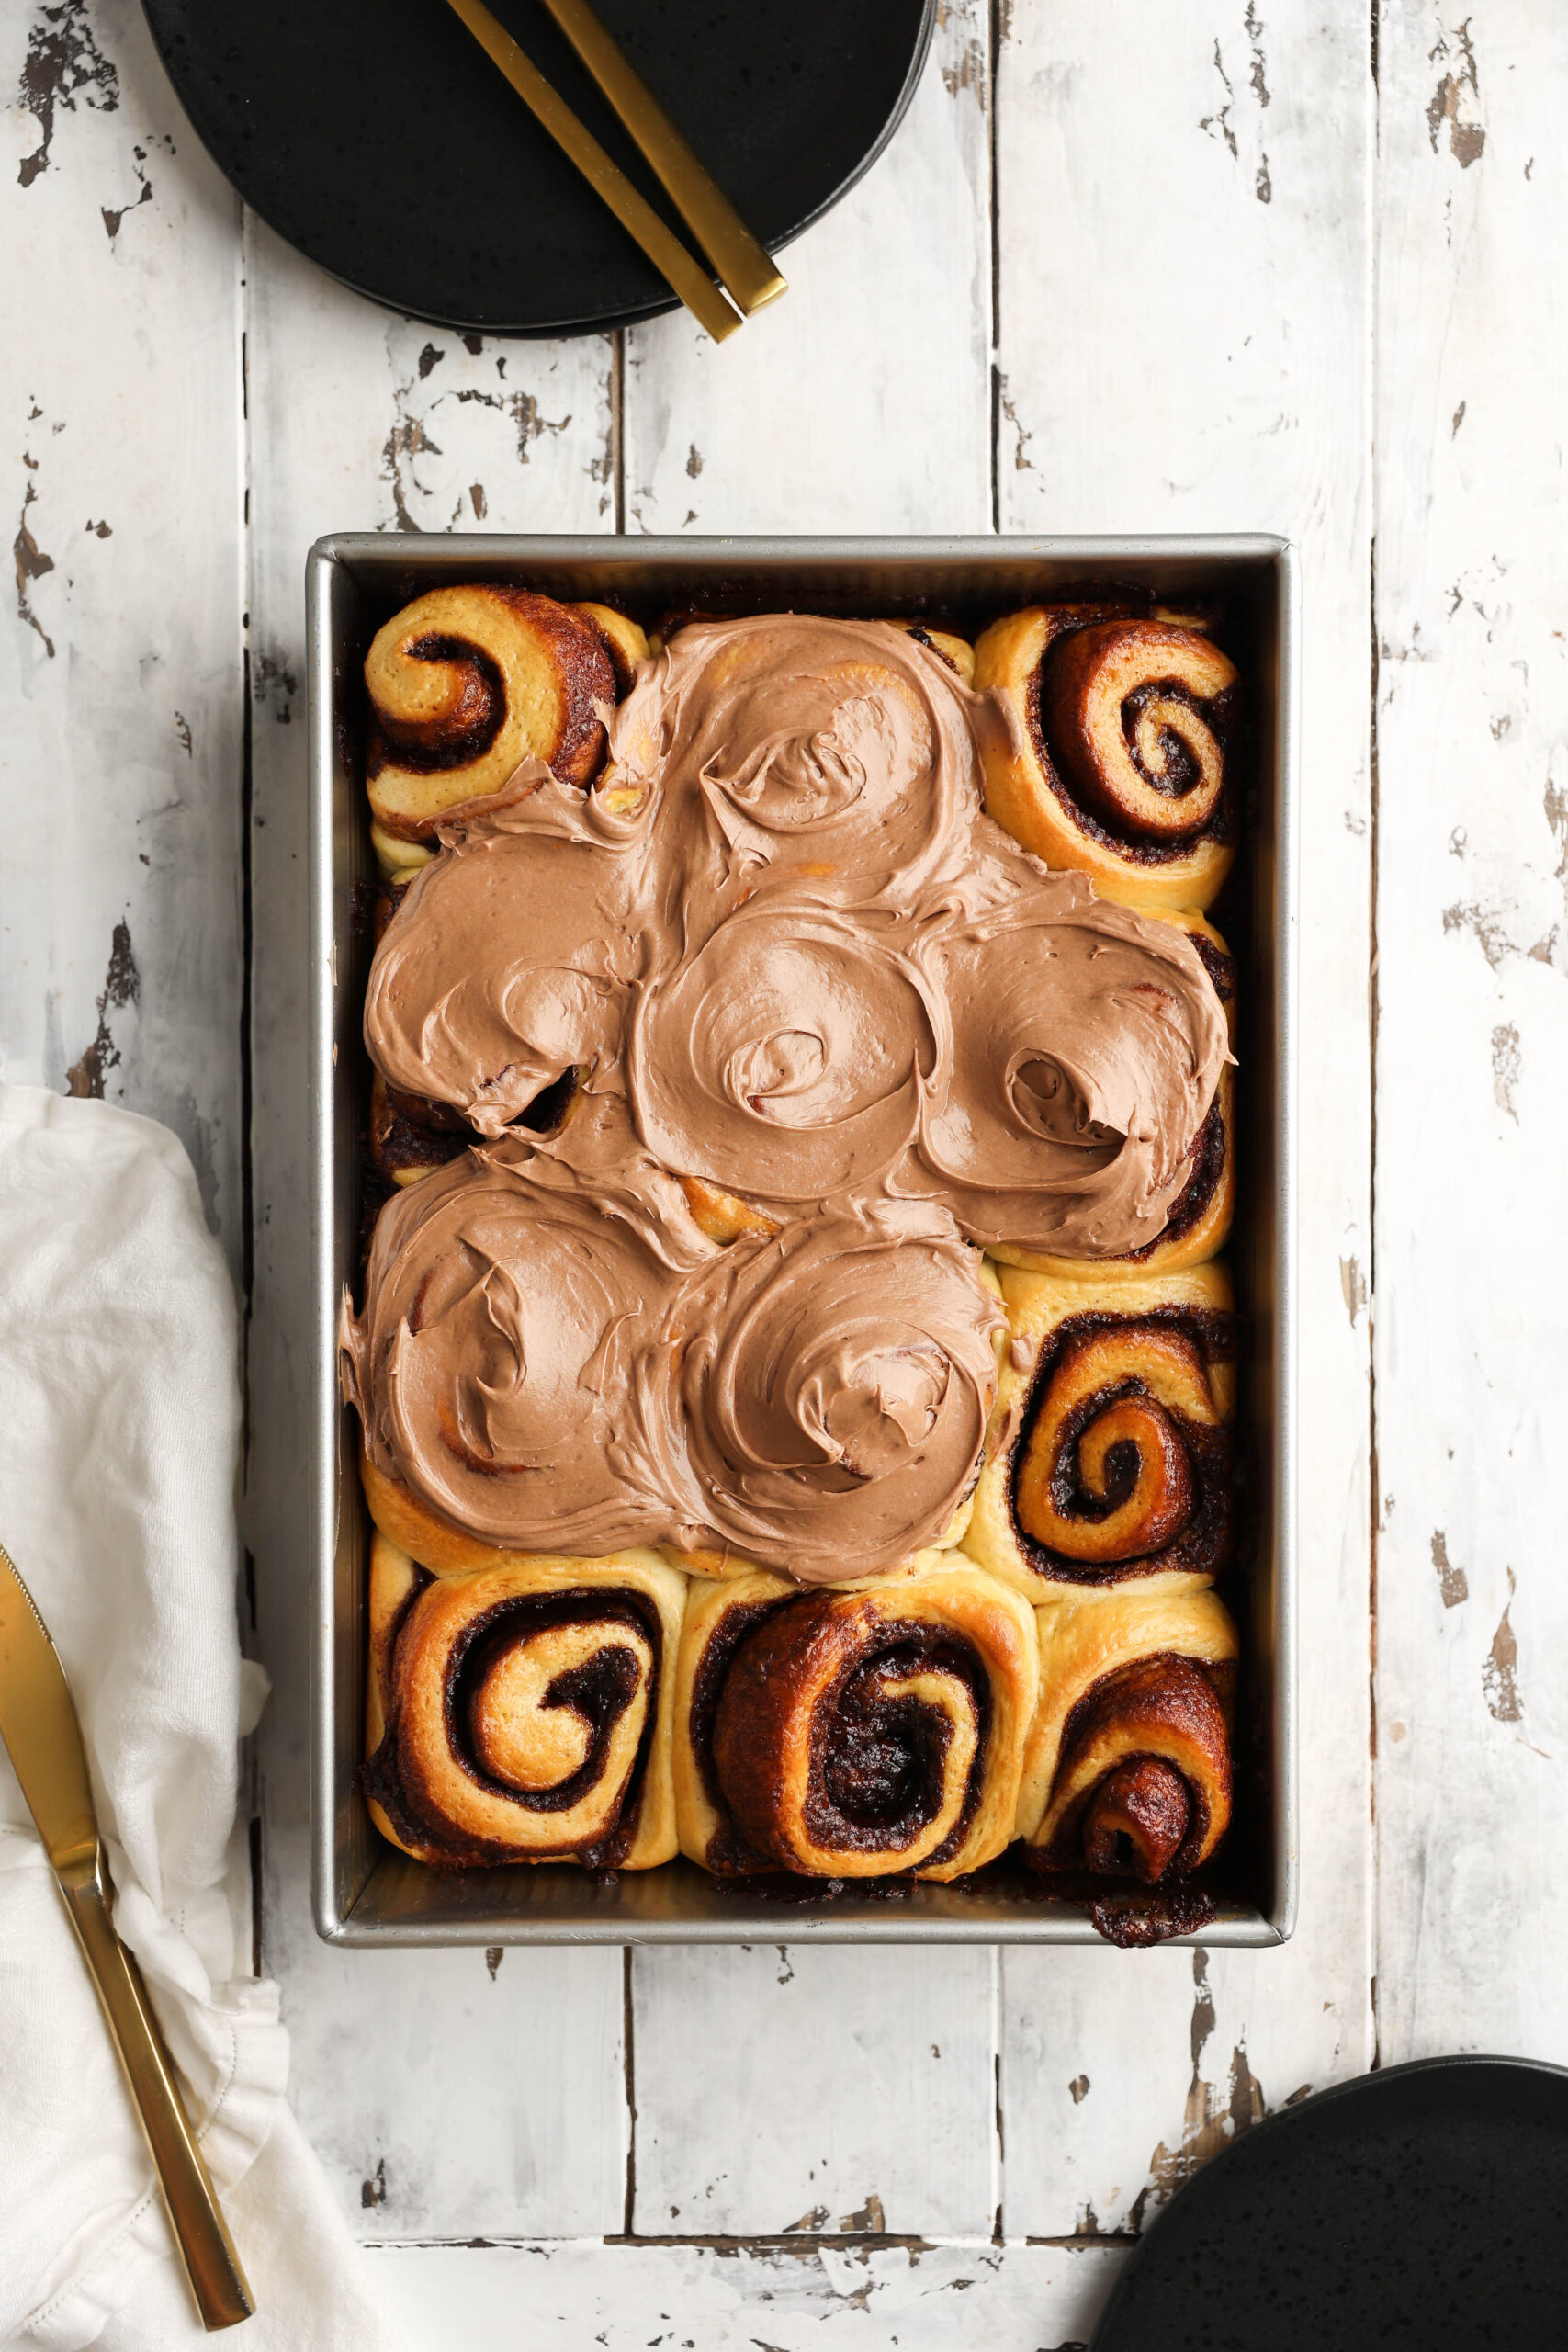 Tasty Treat on Instagram: Introducing Cinnabon!!! Chocobon